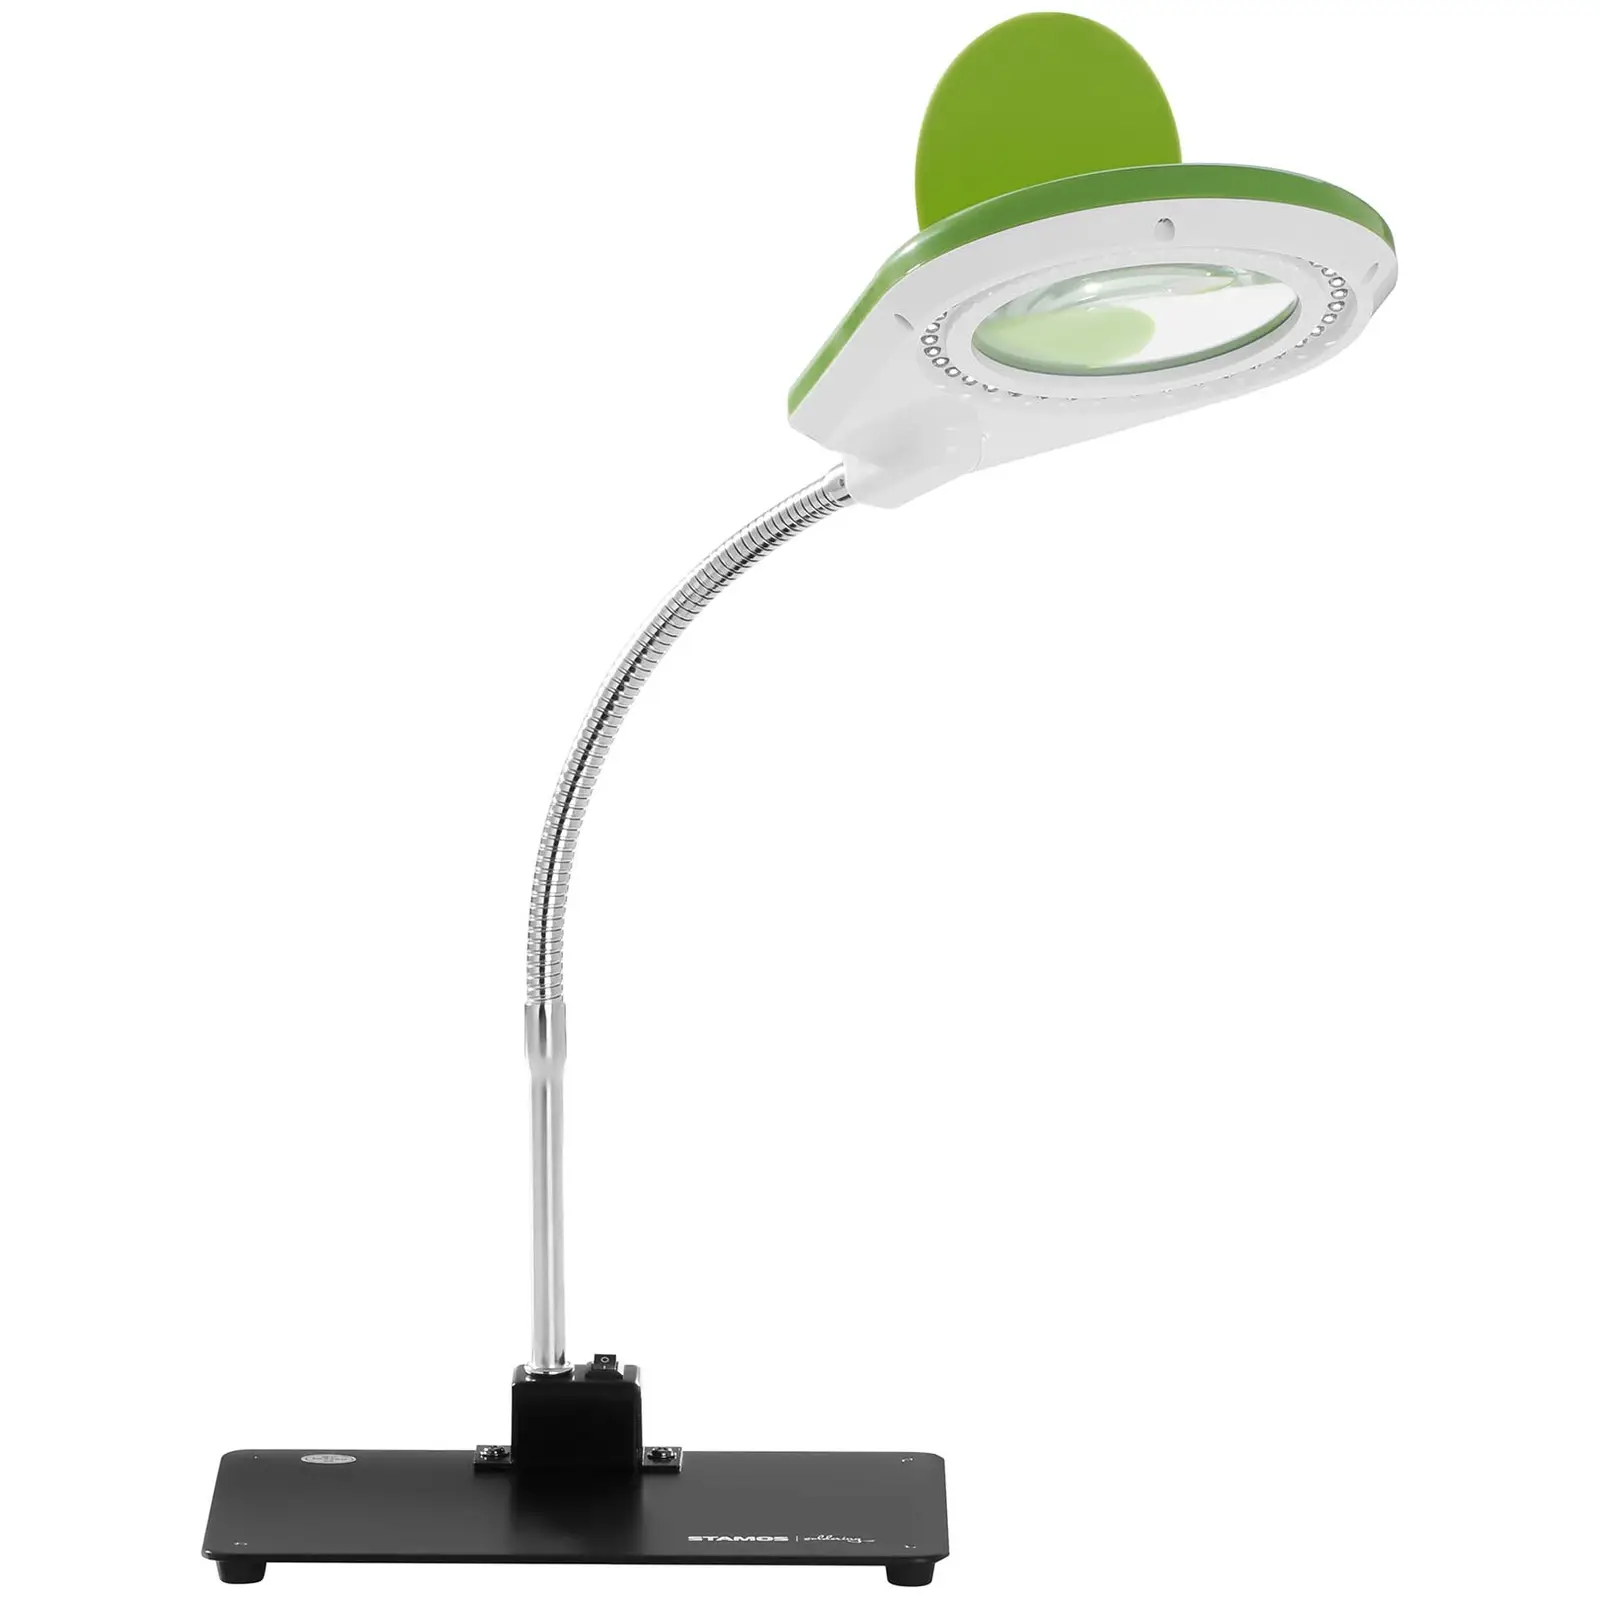 Magnifying Glass Lamp - 5-10 time enlargement - Green